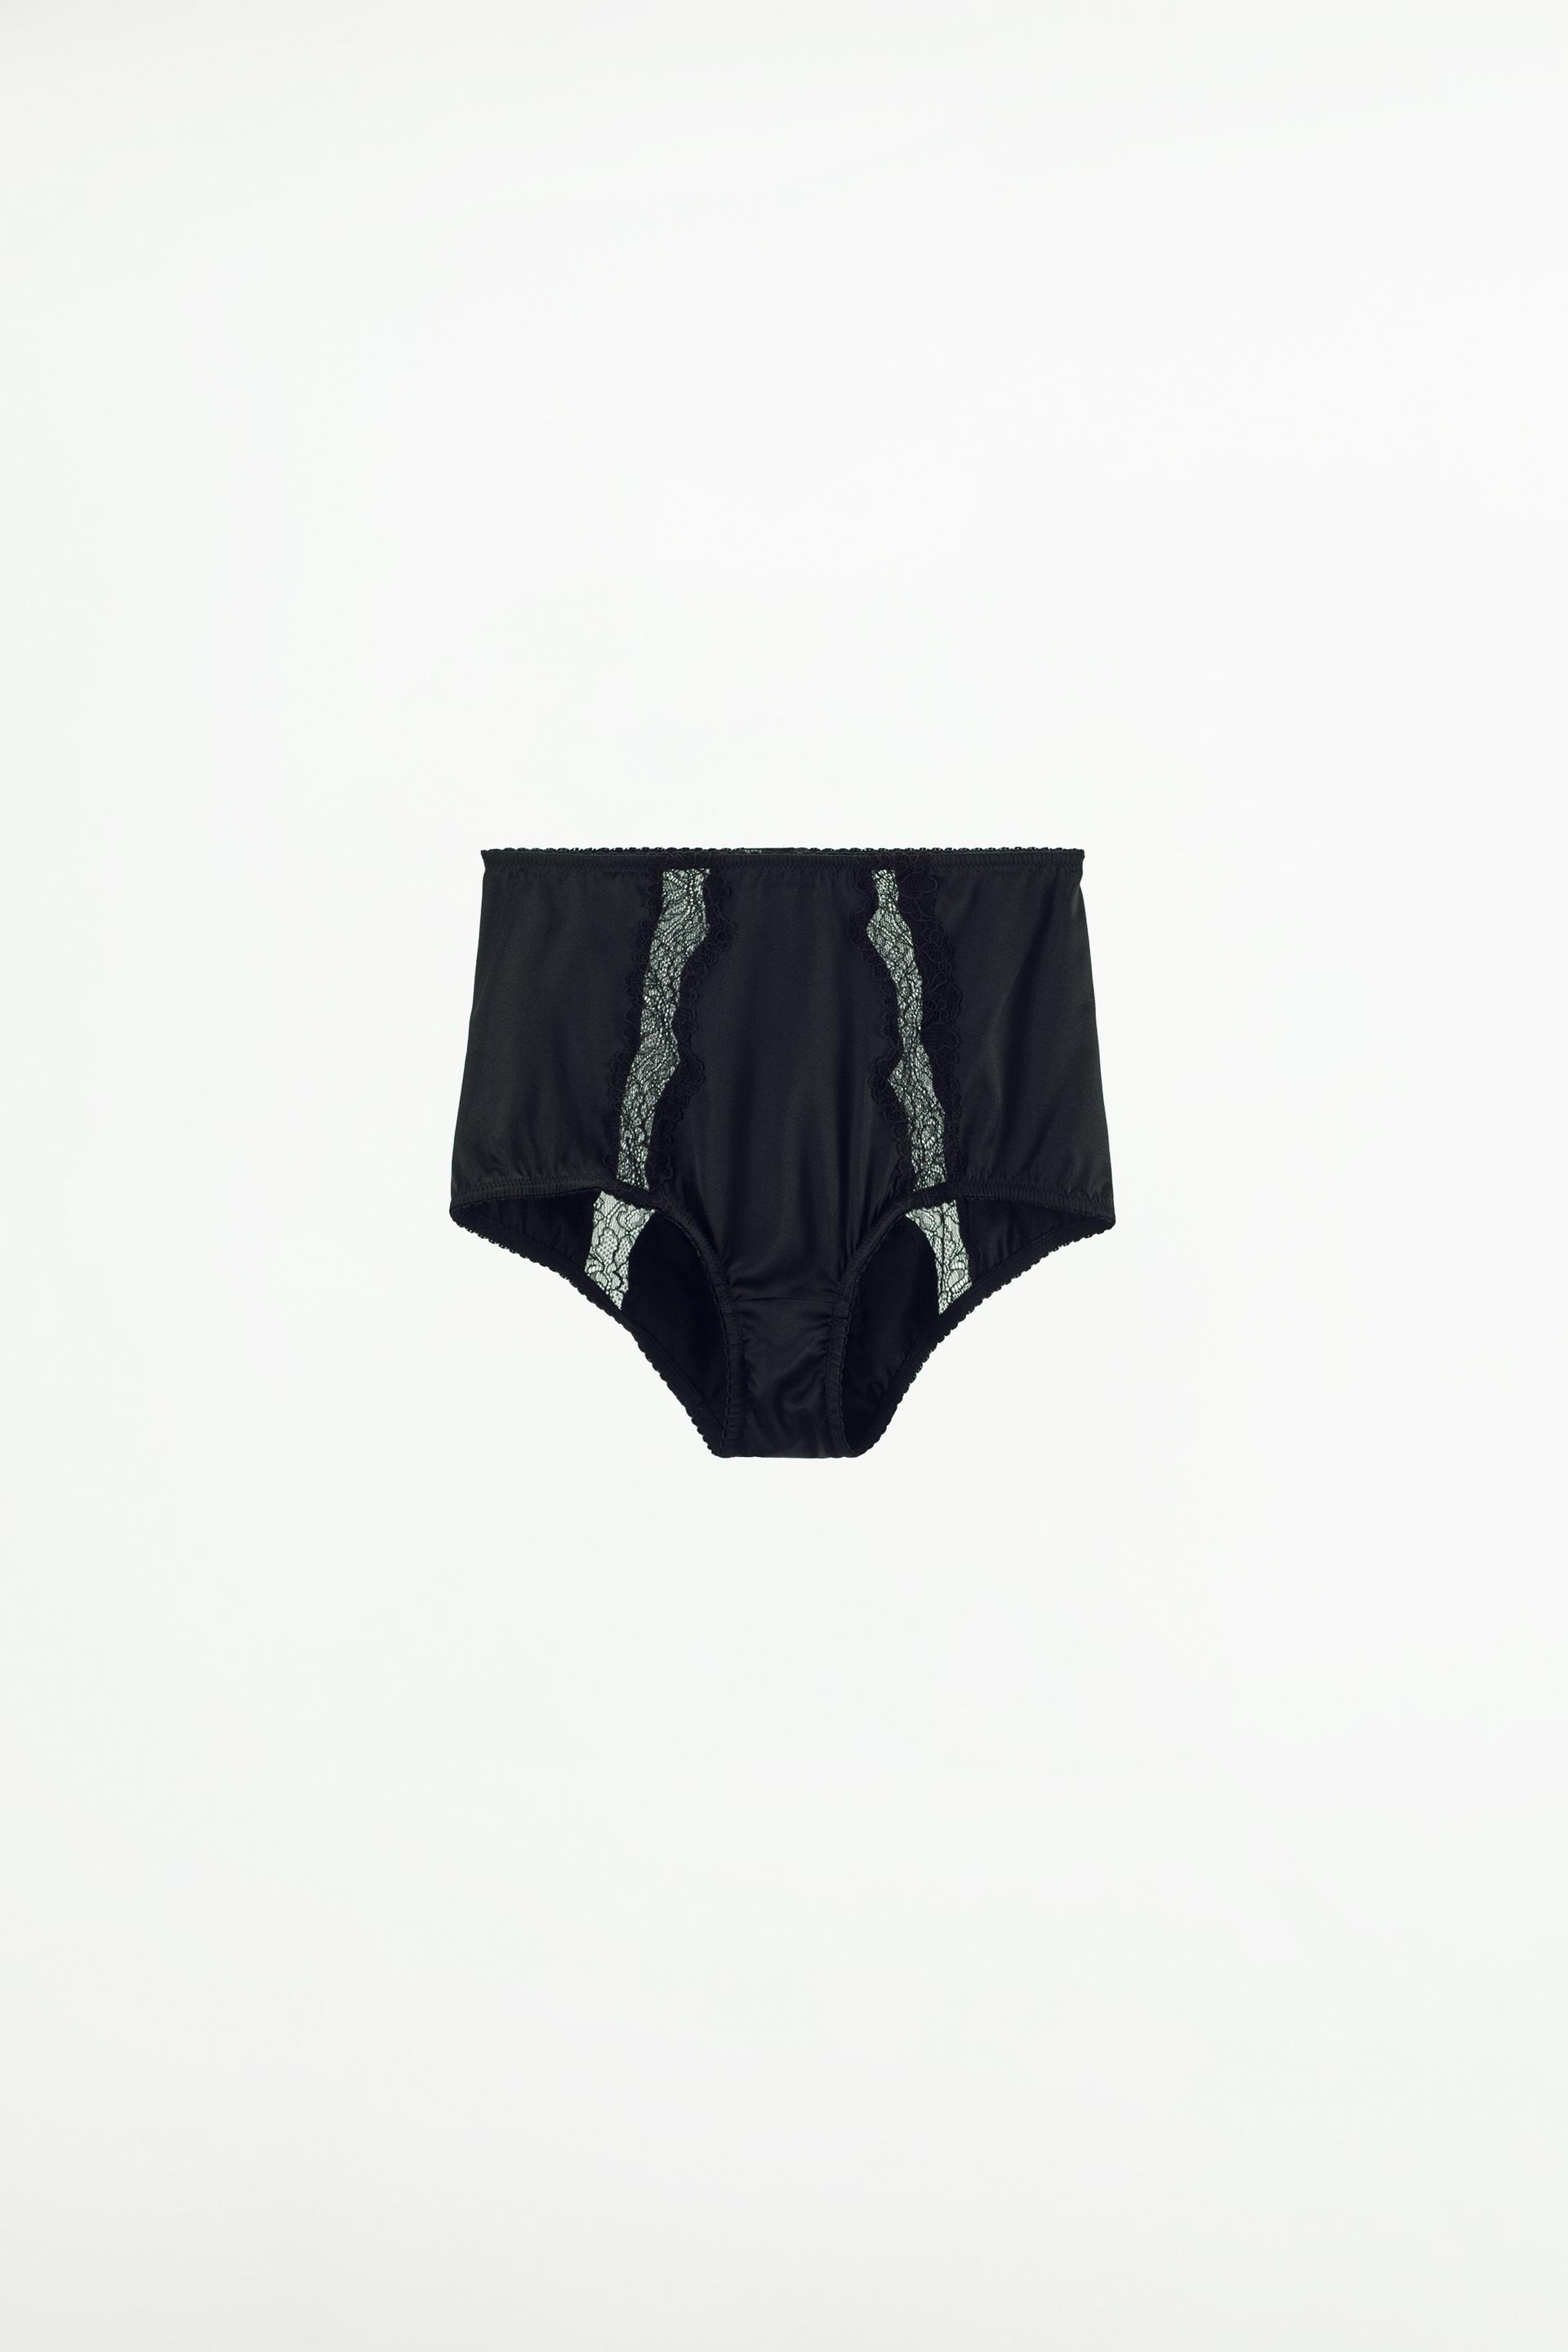 Zara Accessories Women's Black Underwear – S/M/L – Brand New with Tags